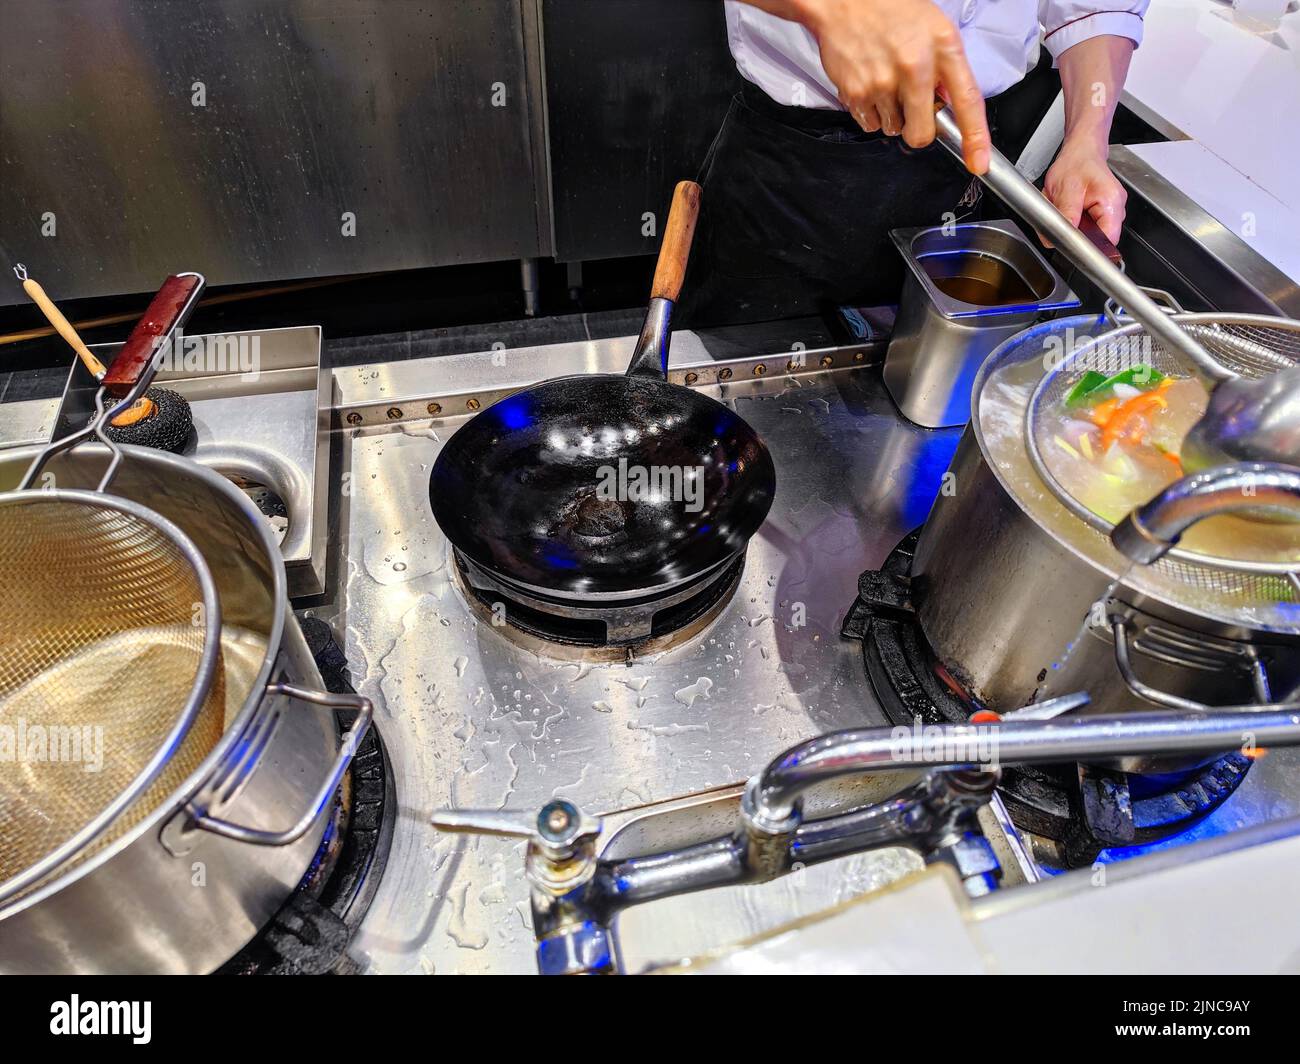 Vari tipi di verdure e carne in salsa asiatica vengono cucinati e pronti per essere mescolati fritti in una pentola wok Foto Stock